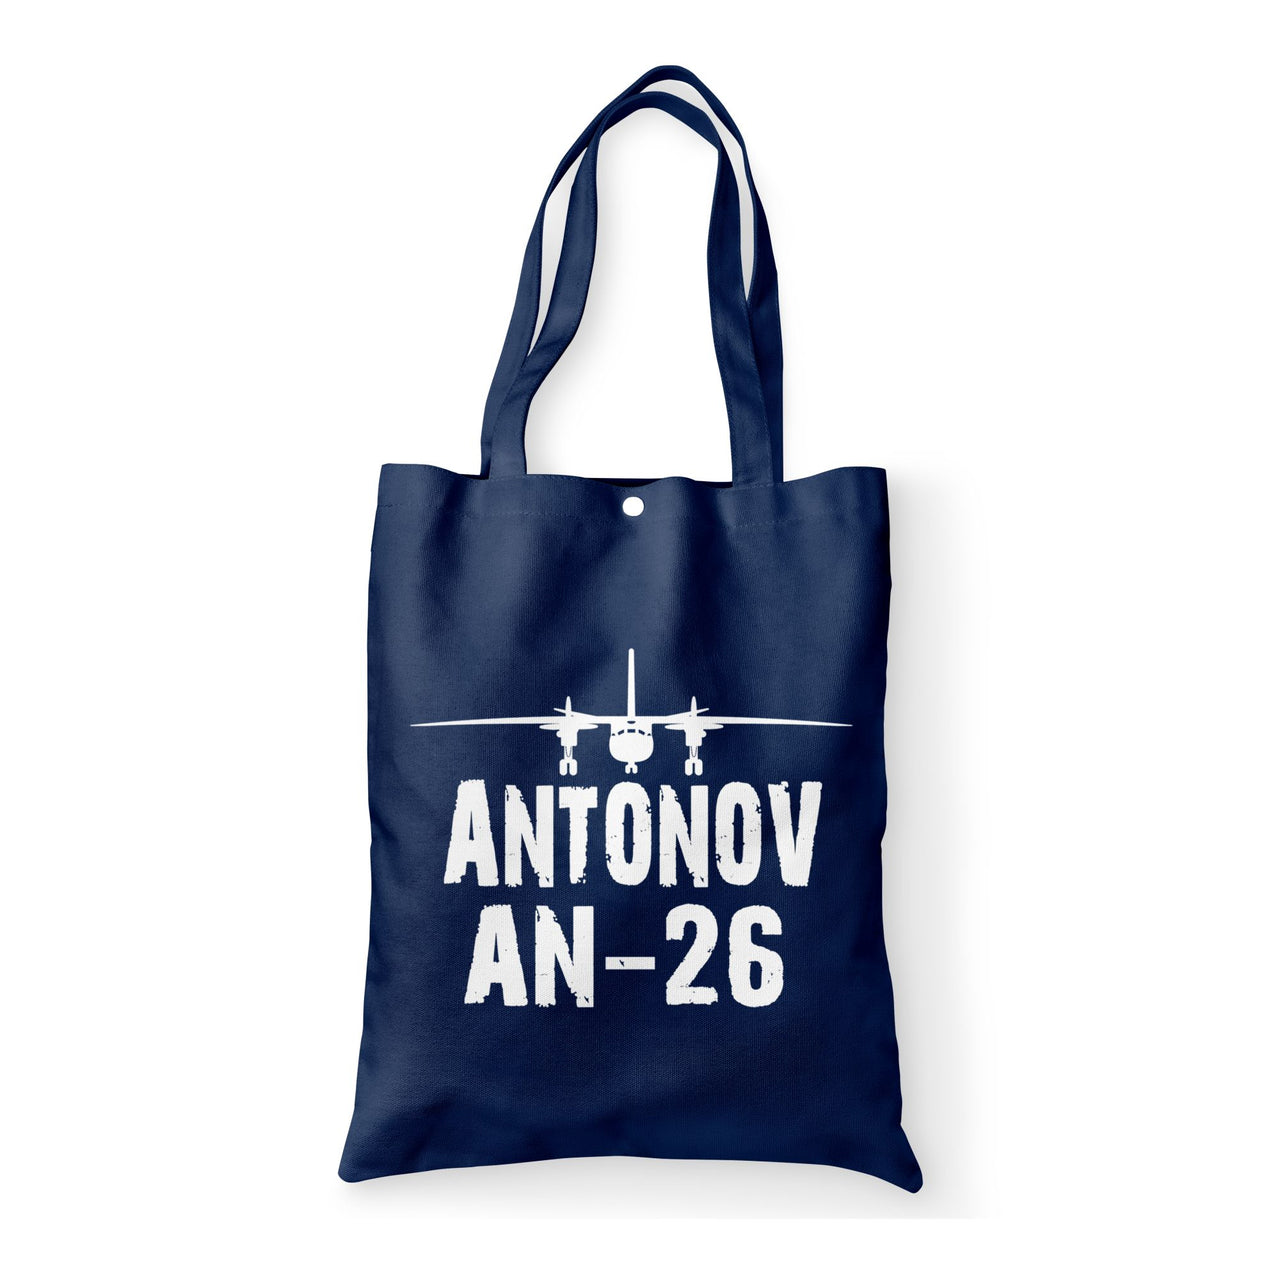 Antonov AN-26 & Plane Designed Tote Bags